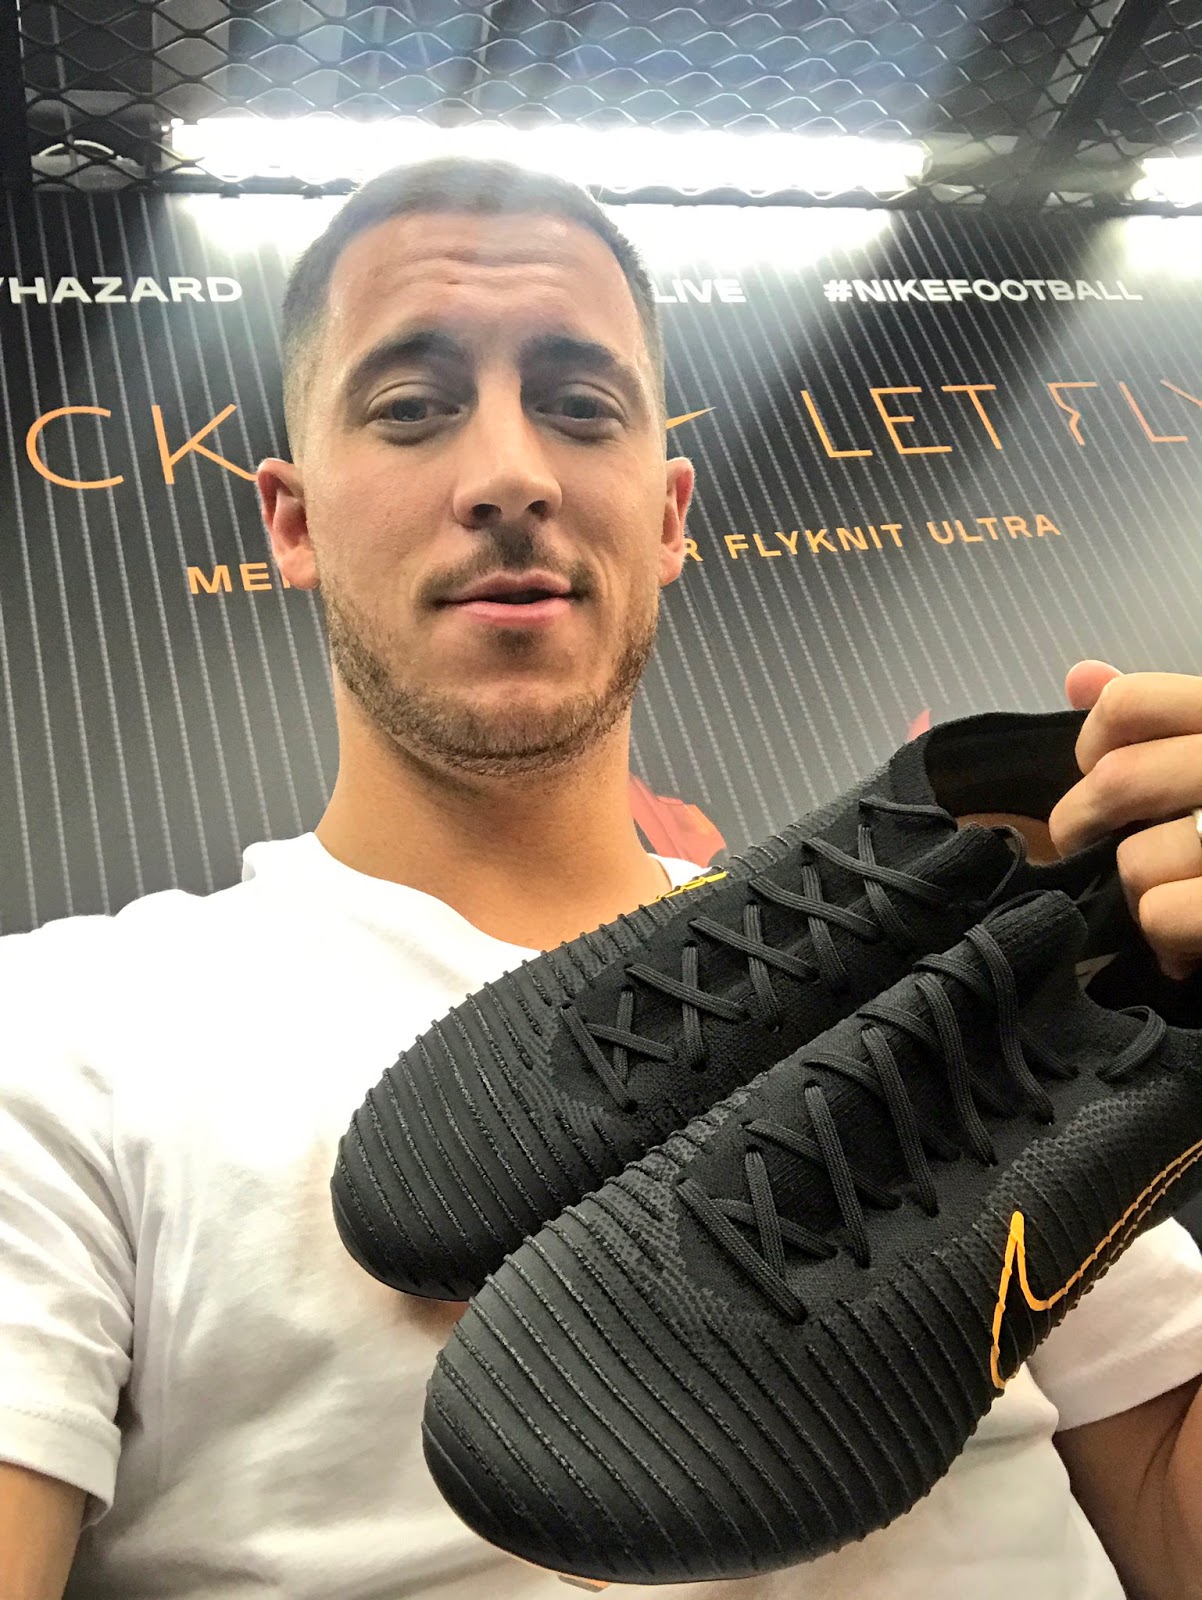 pyramide gift Dempsey Eden Hazard Trains in Nike Flyknit Ultra Boots - Footy Headlines